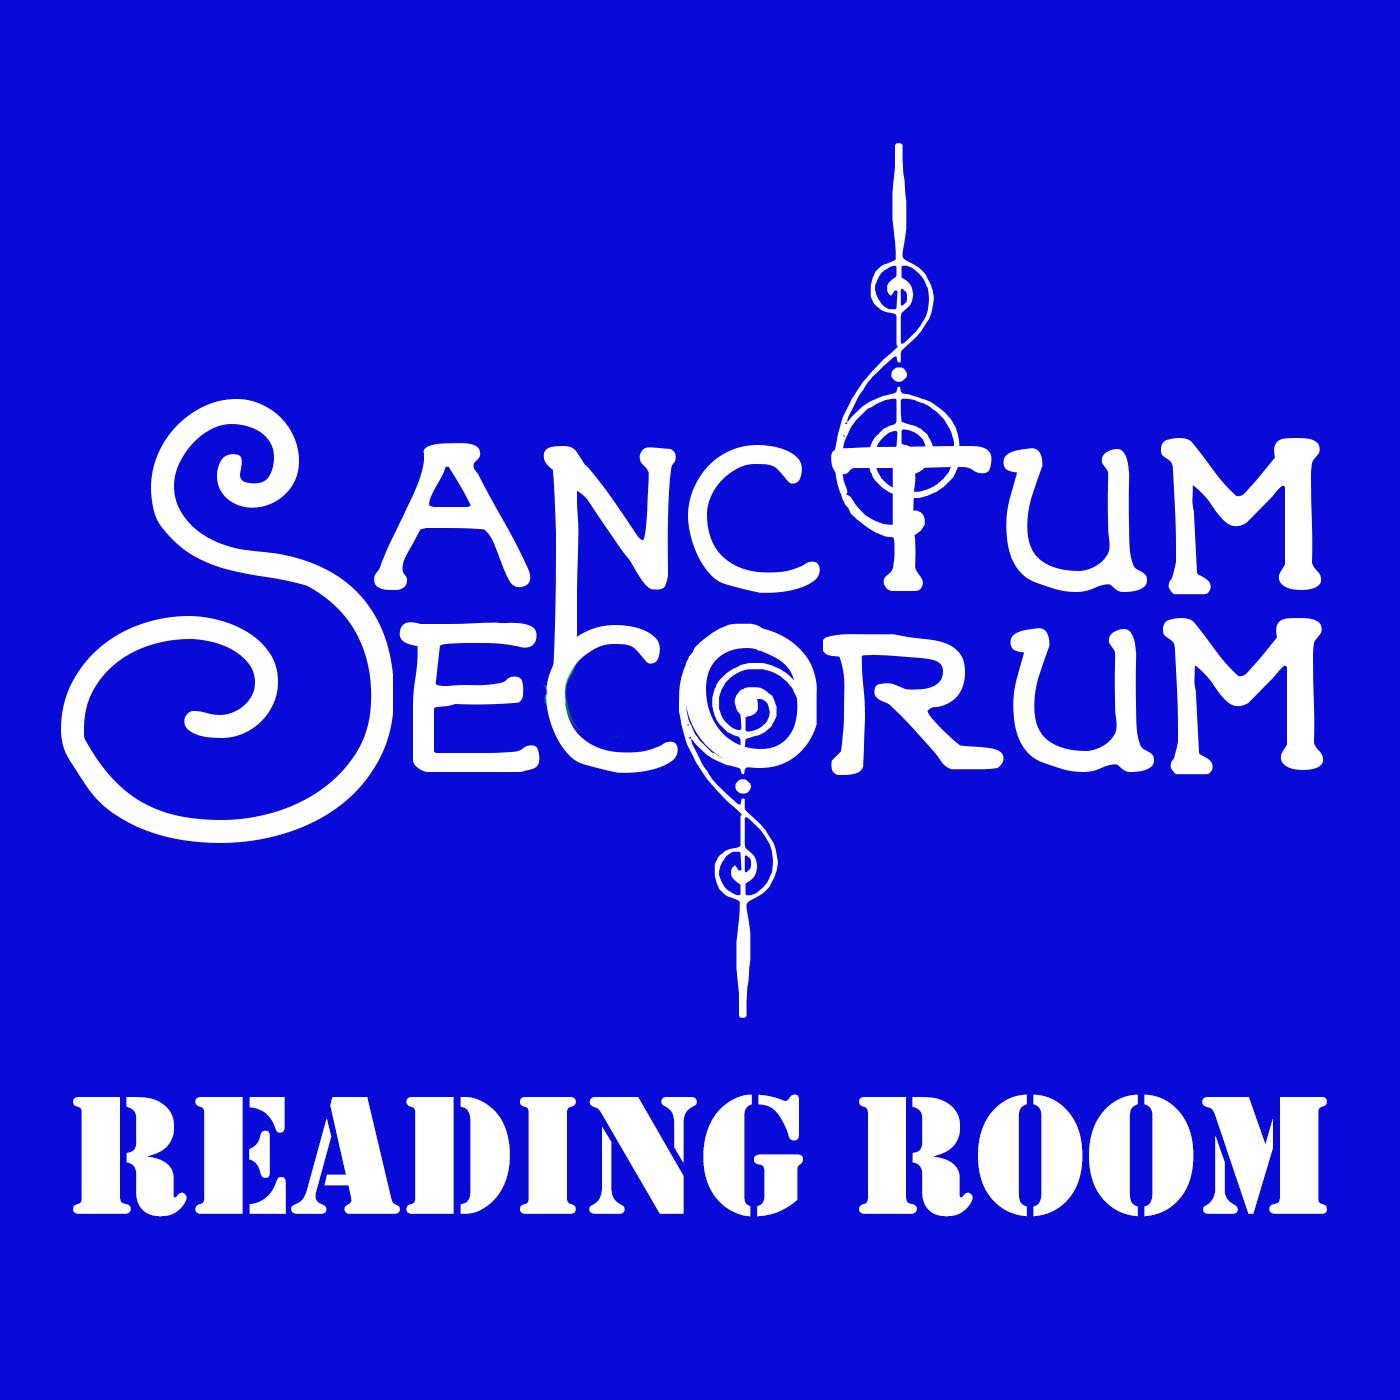 Sanctum Secorum Reading Room #17 - The Knight of the Swords